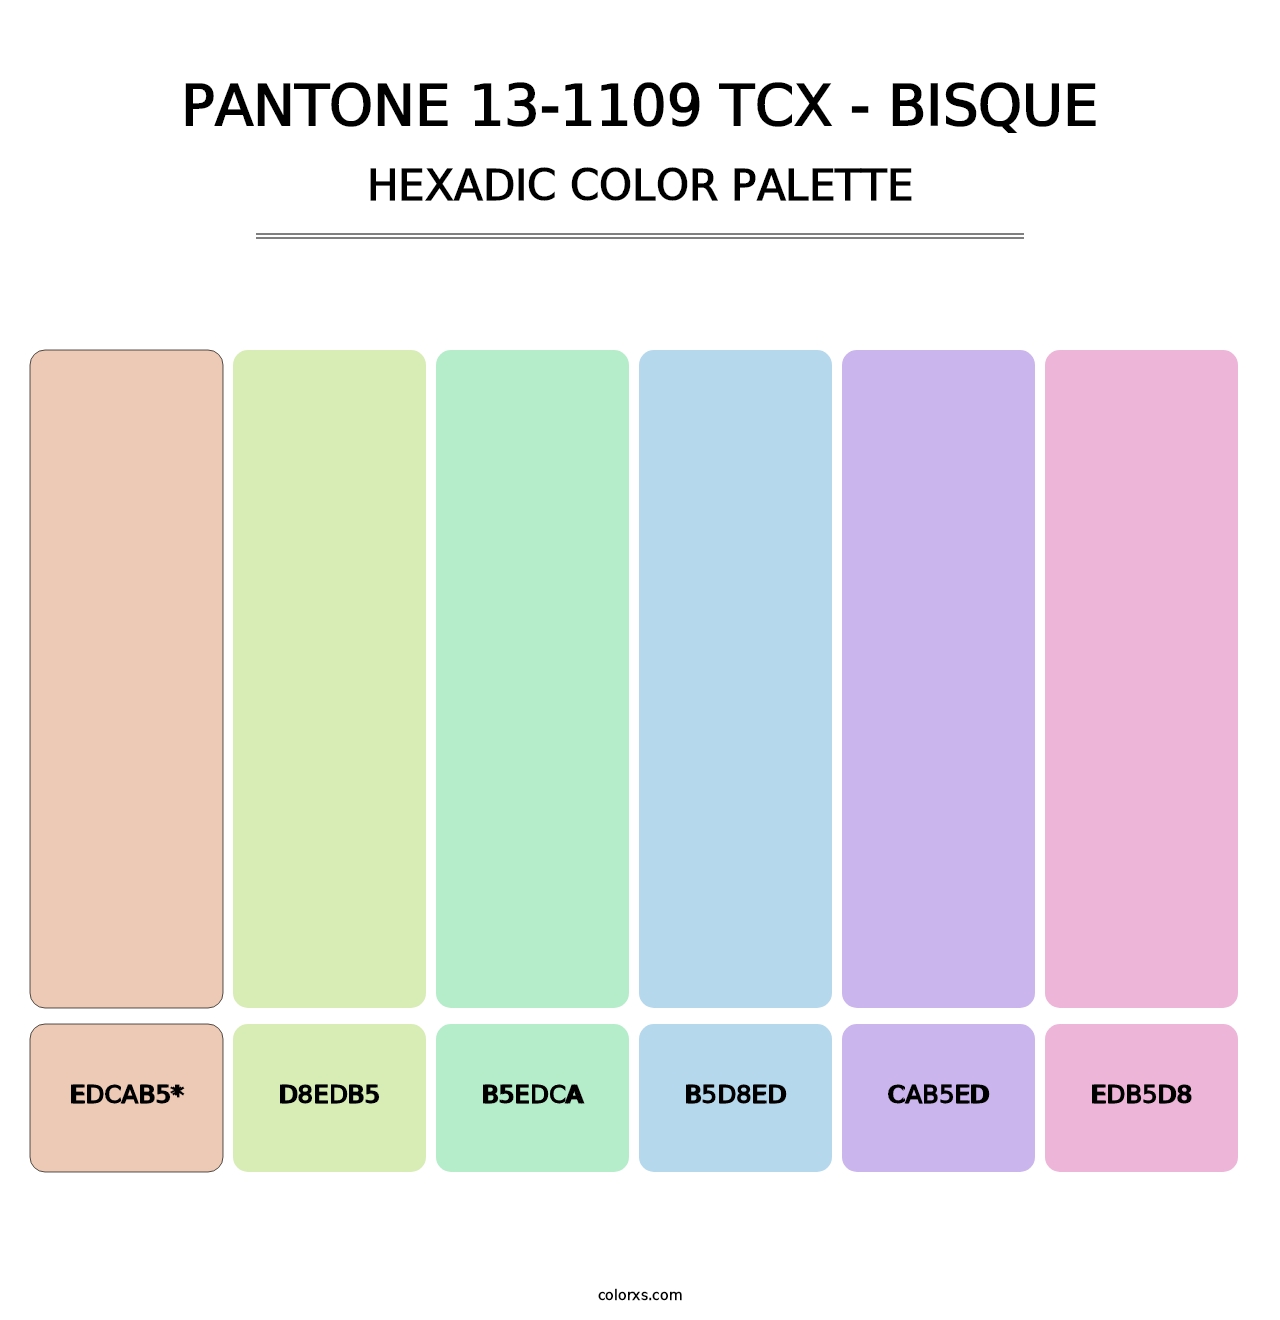 PANTONE 13-1109 TCX - Bisque - Hexadic Color Palette